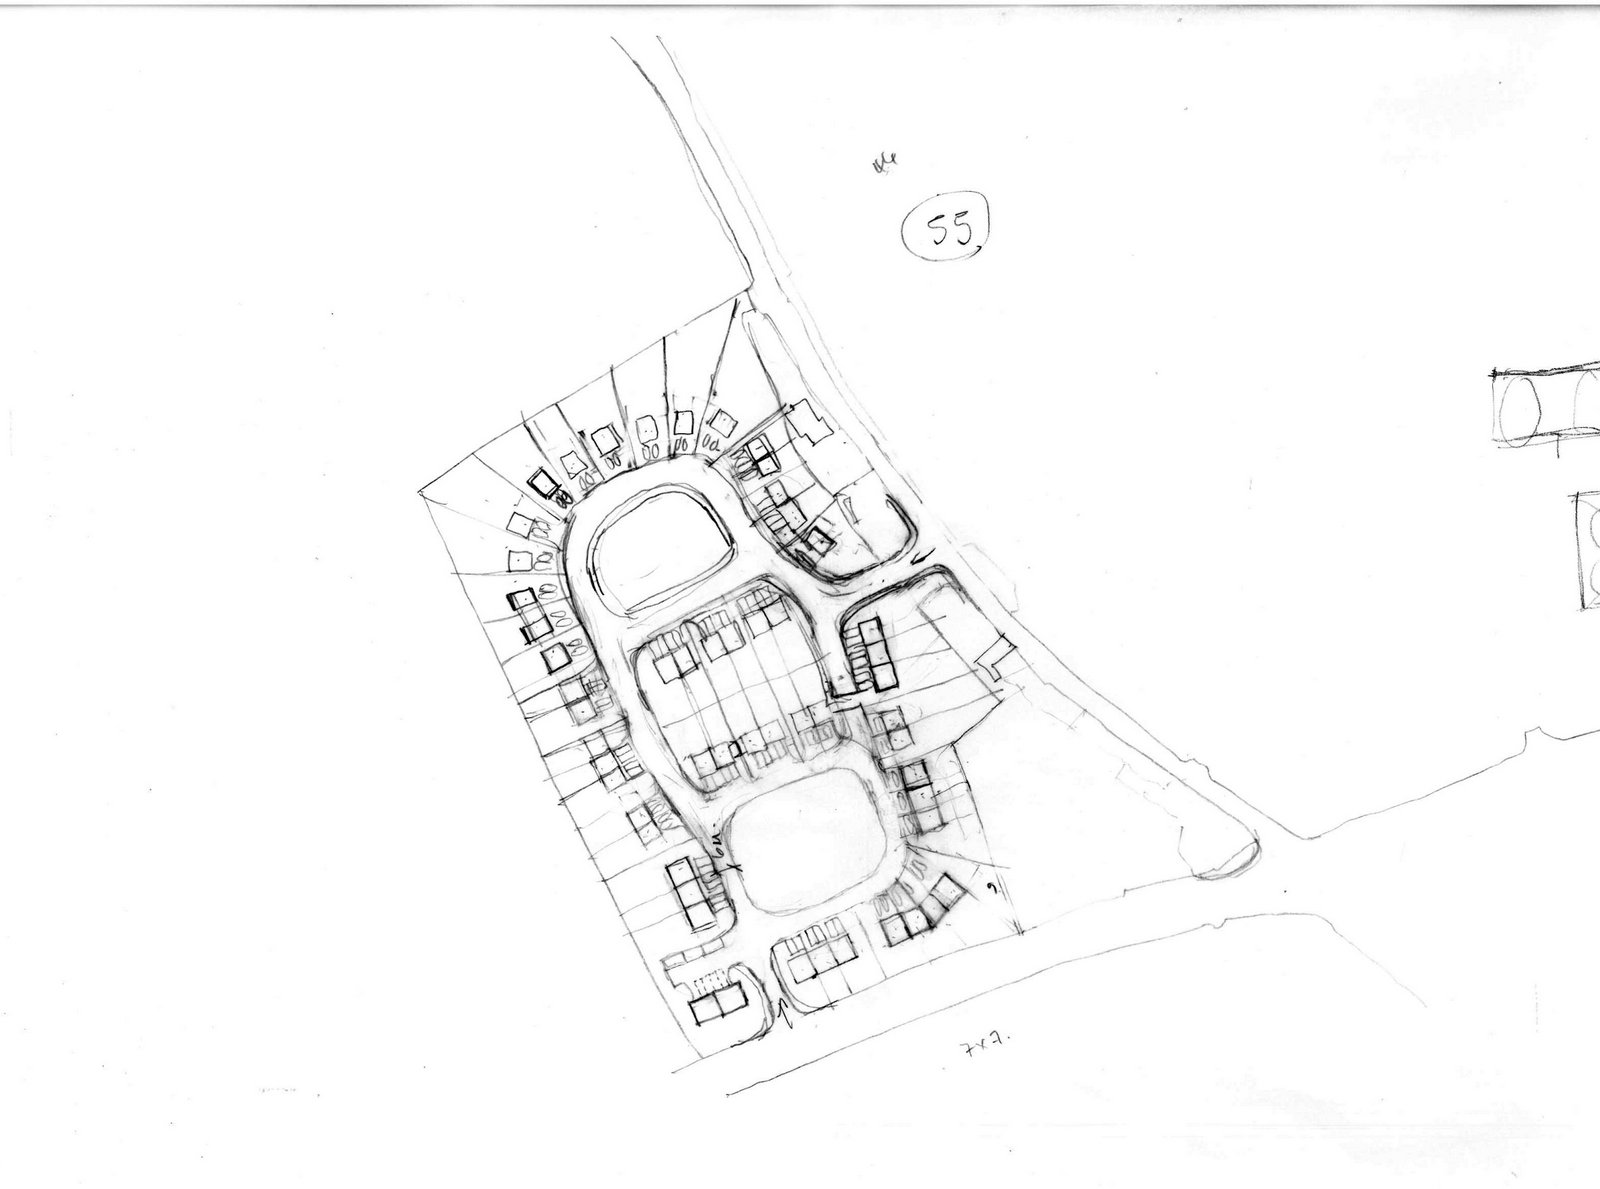 henstridge 1-1250 sketch plan.jpg